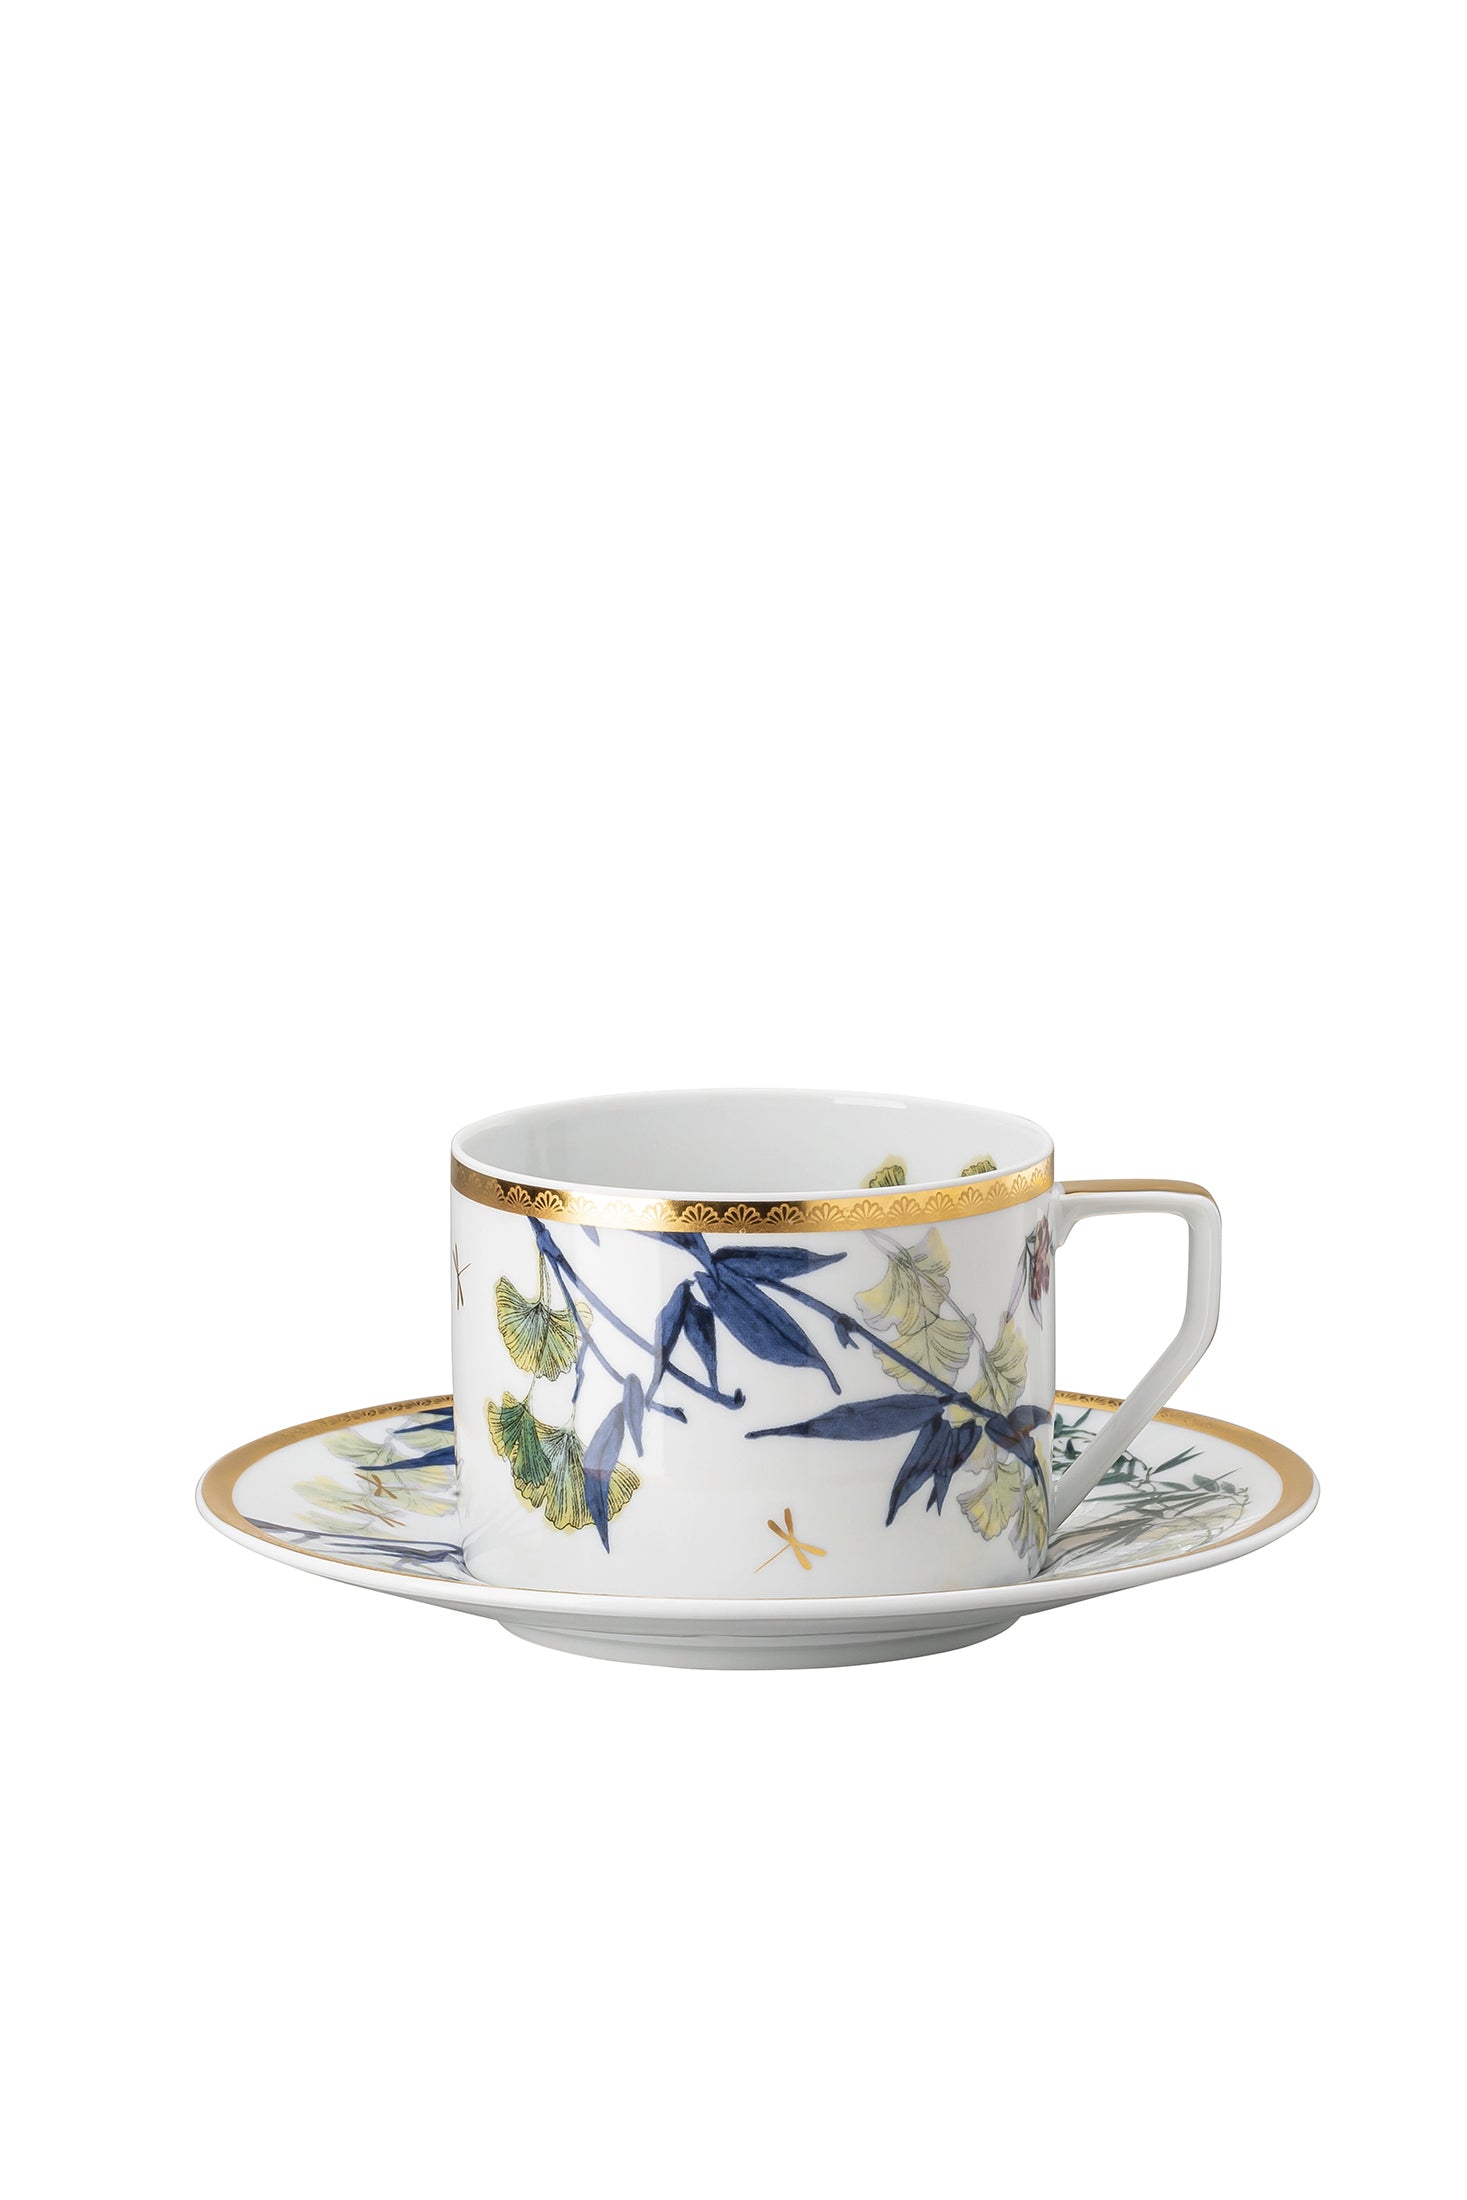 Rosenthal Turandot - Tea Cup/Saucer 7 oz 6 in White